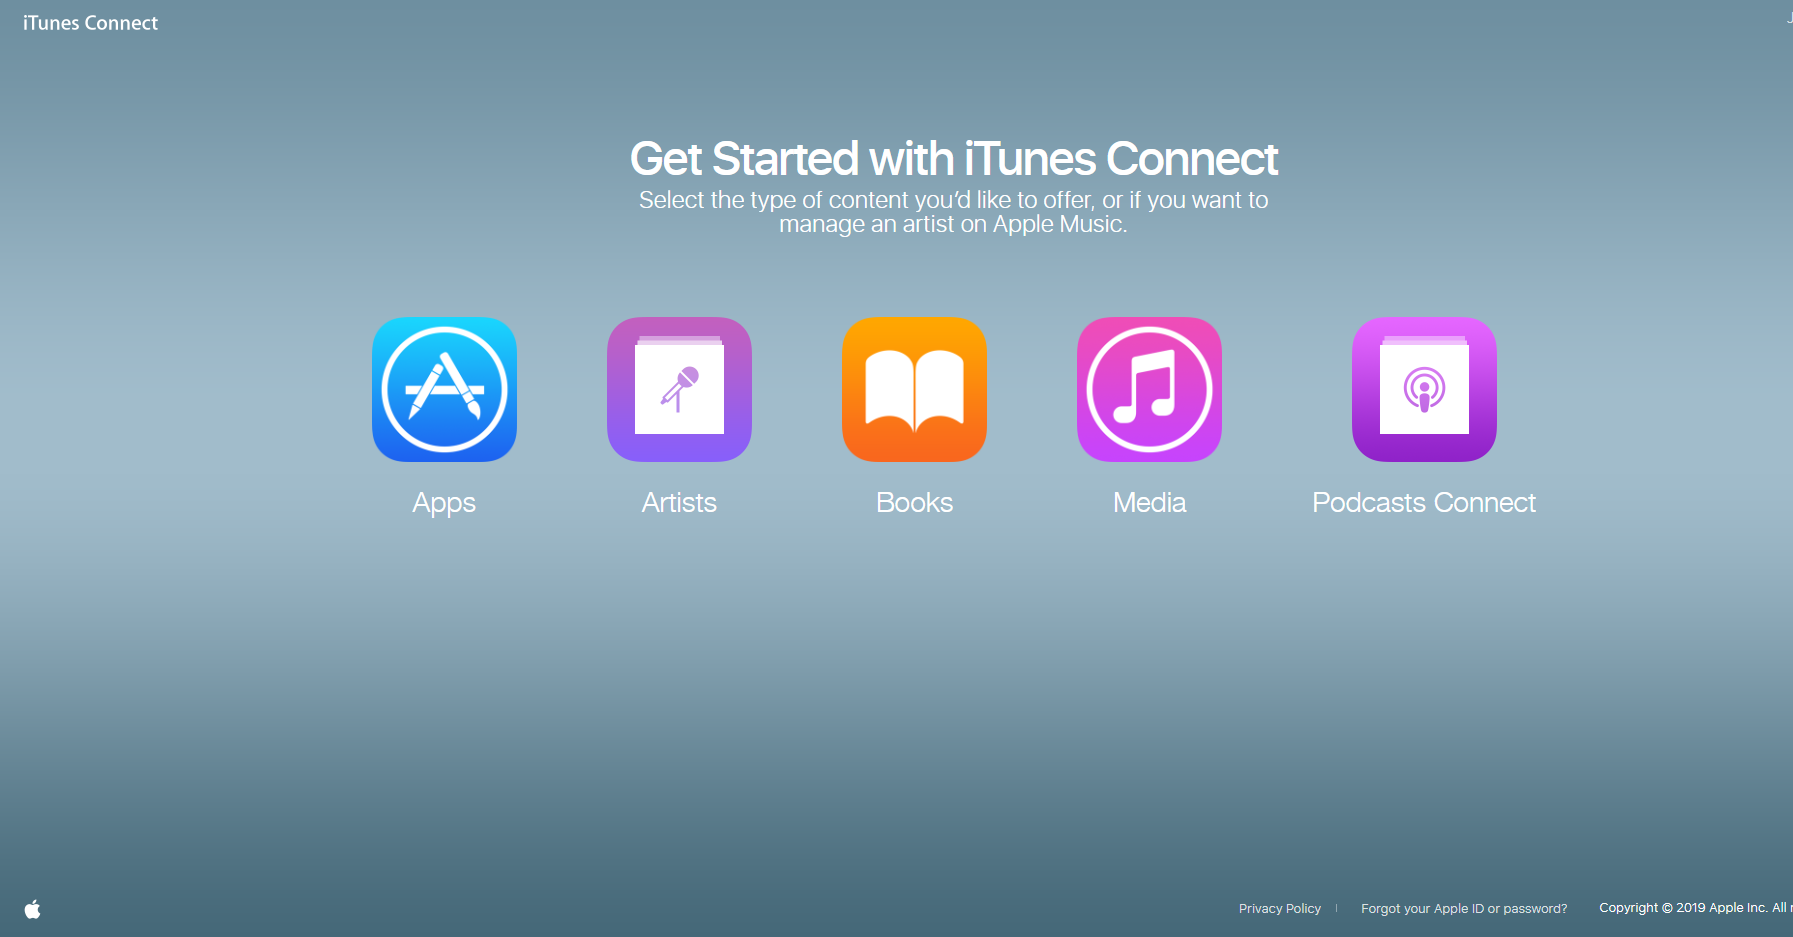 Mzstore itunes apple. Apple developer. Apple ITUNES. Apple и ITUNES content. Apple Podcasts connect.